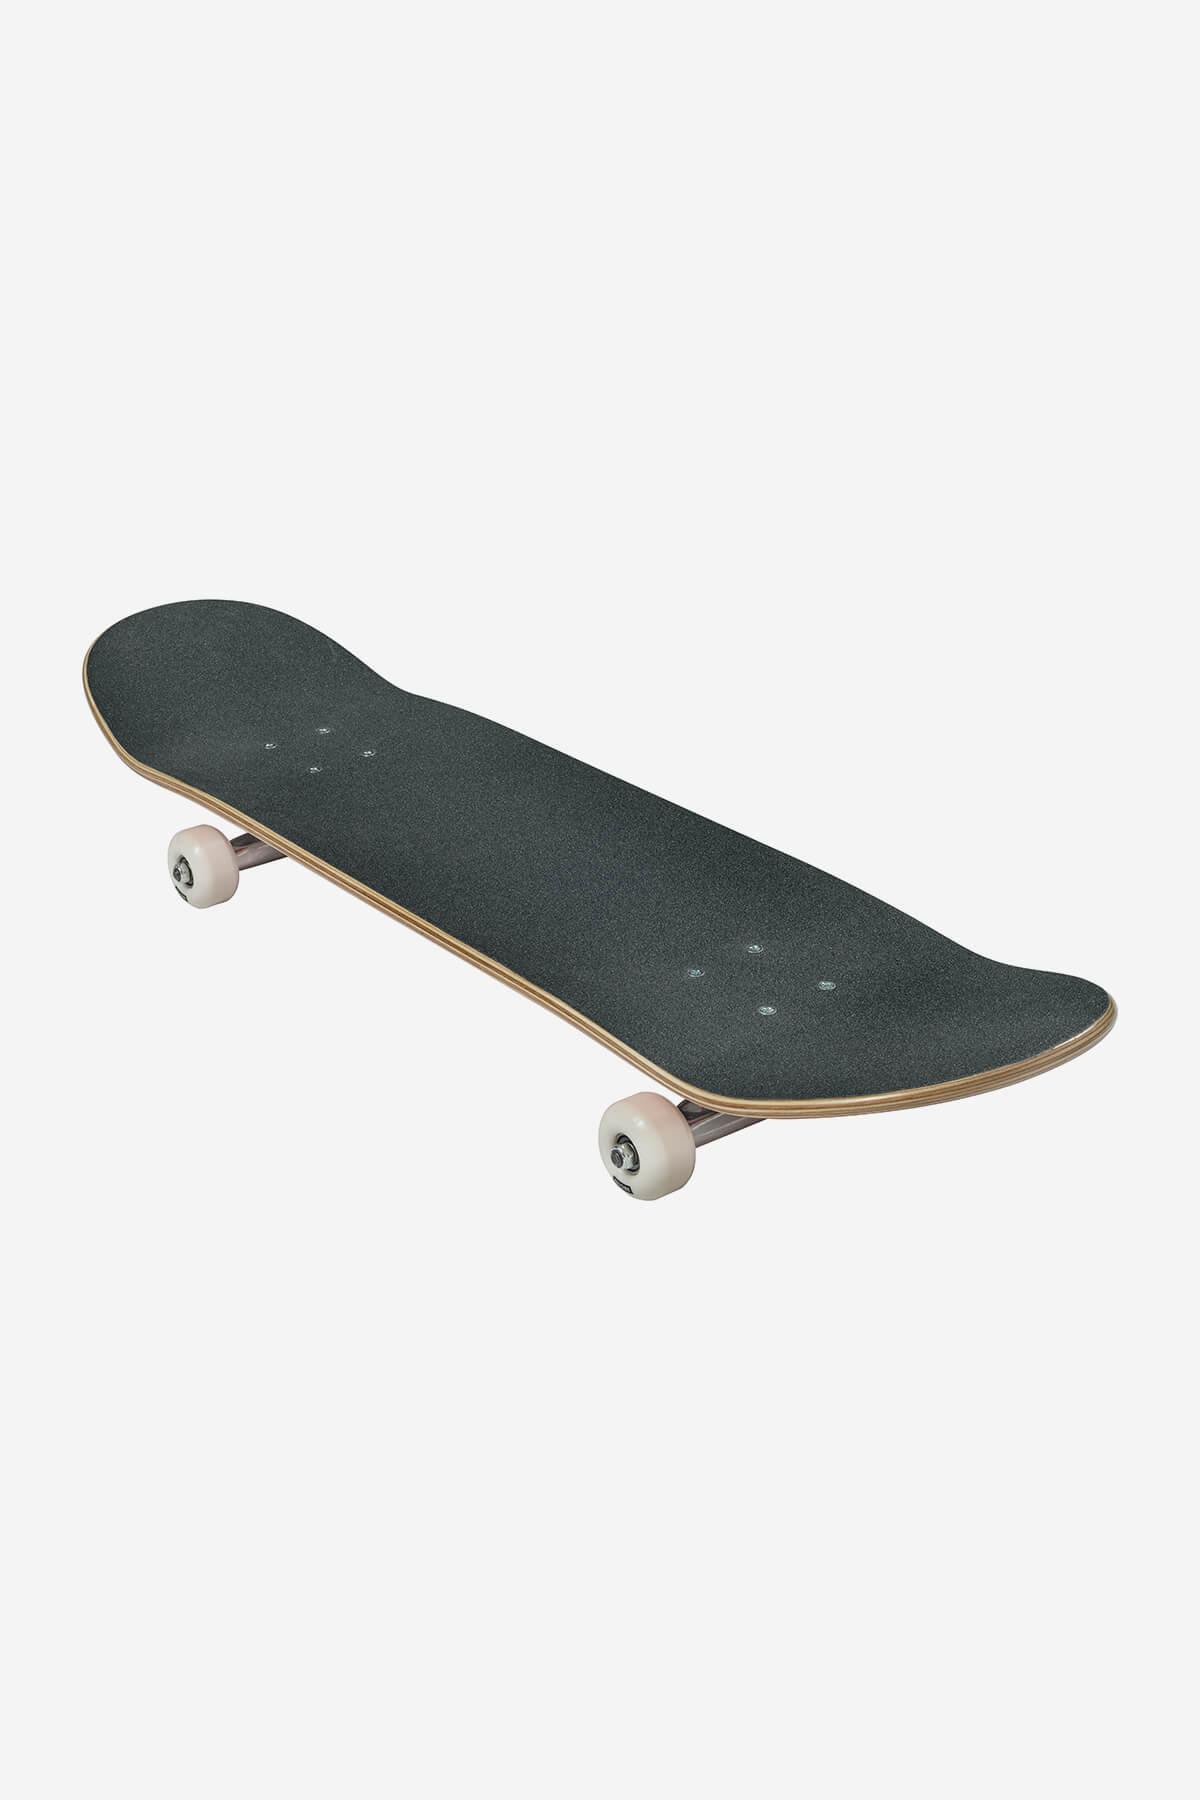 Globe - G0 Fubar - Red/White - 8,25" completo Skateboard